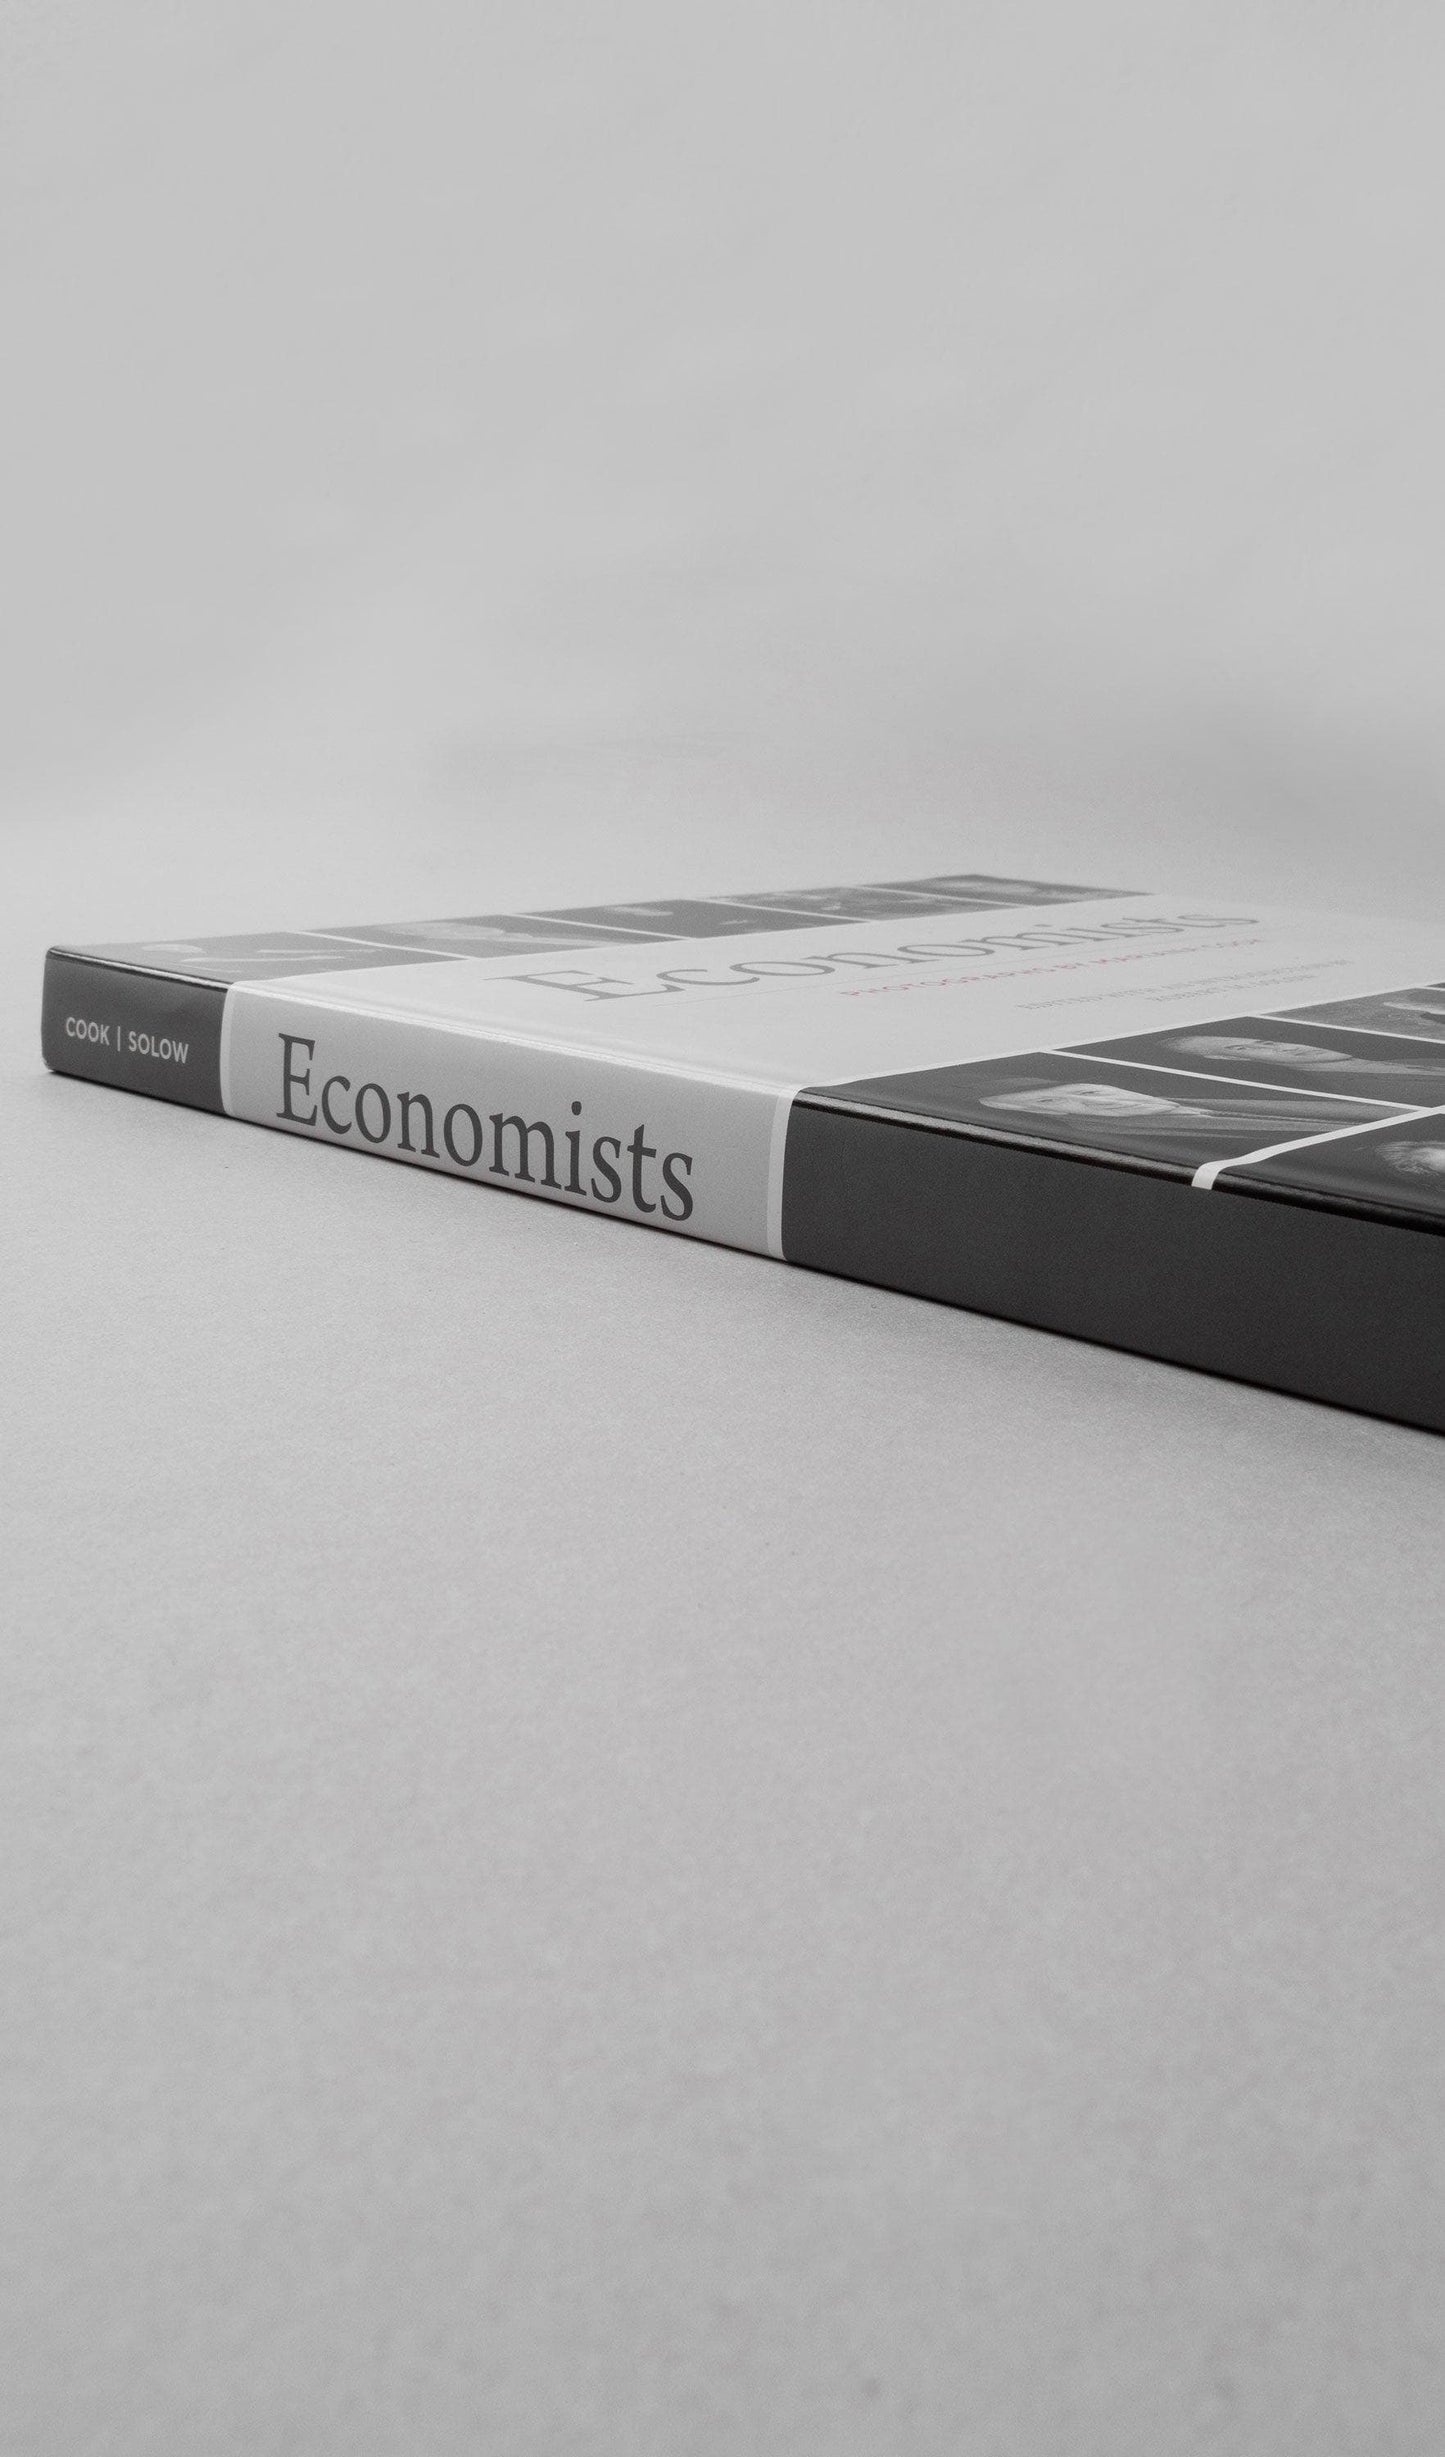 Acapella Ropa ACAPELLA MX Libro - Economists